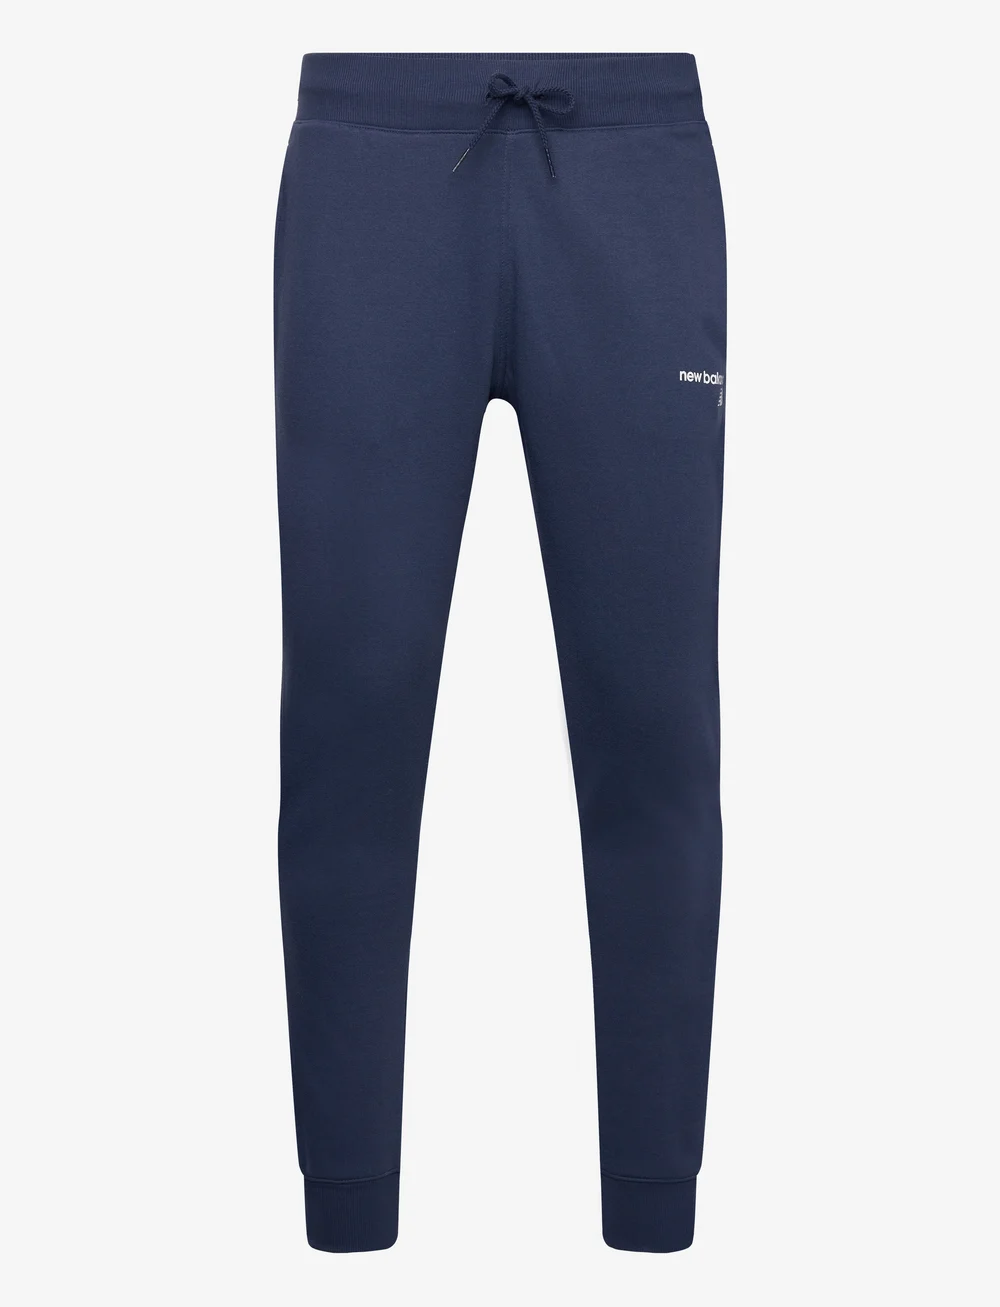 New Balance Nb Classic Core Fleece Pant - Sweatpants